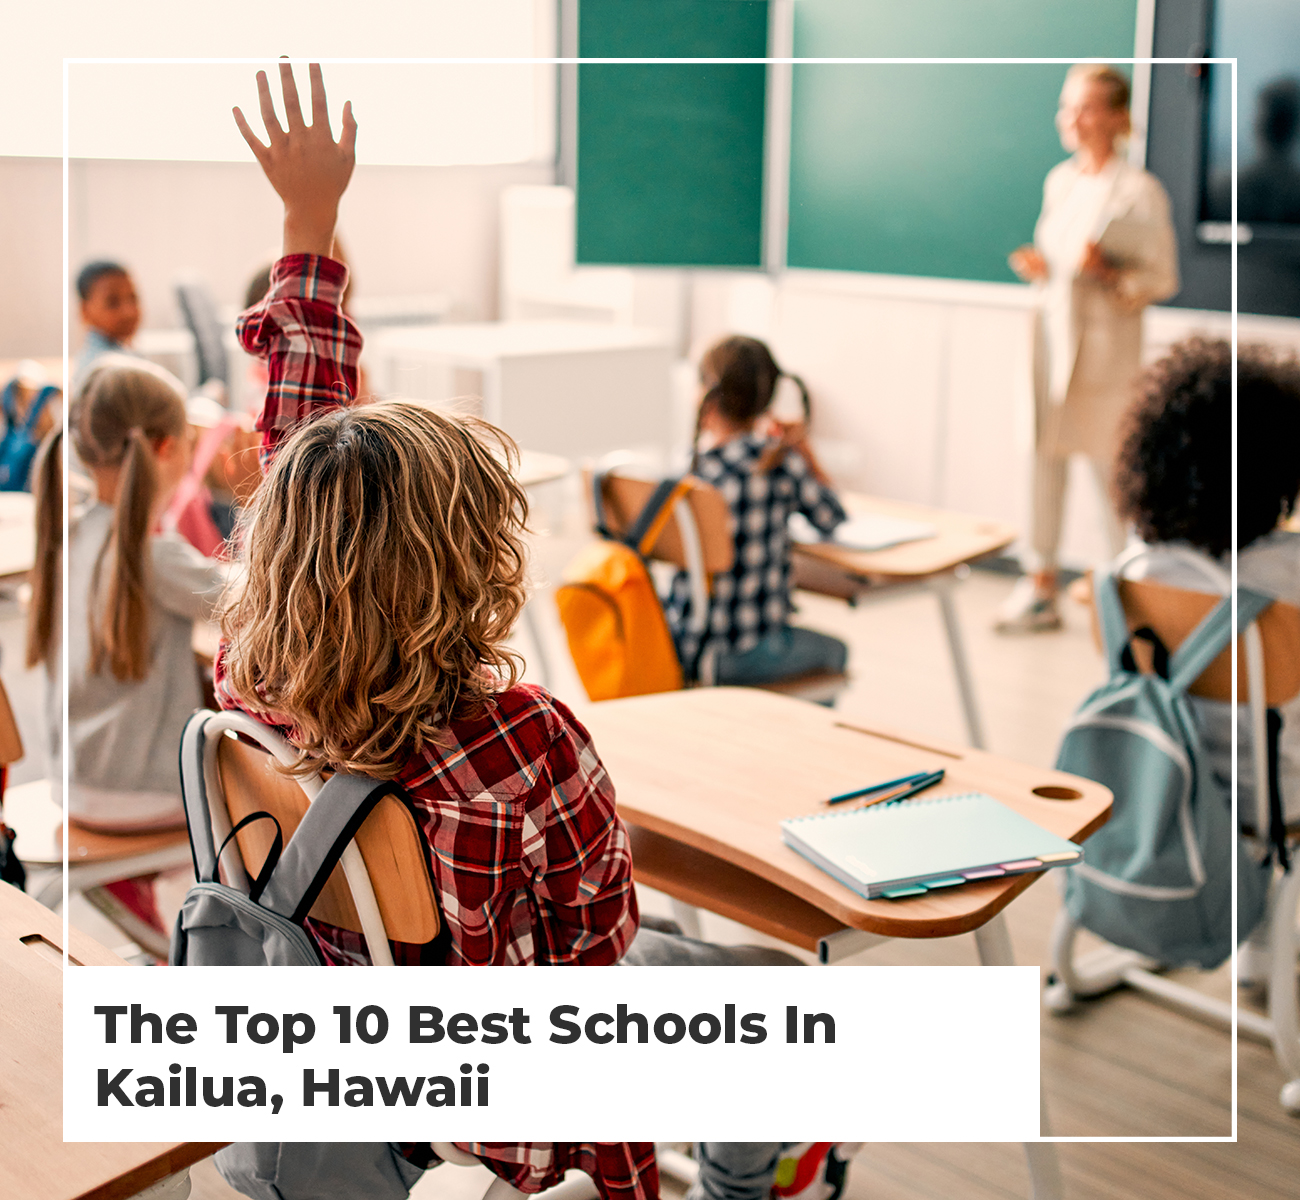 The Top 10 Best Schools In Kailua, Hawaii - Main Image